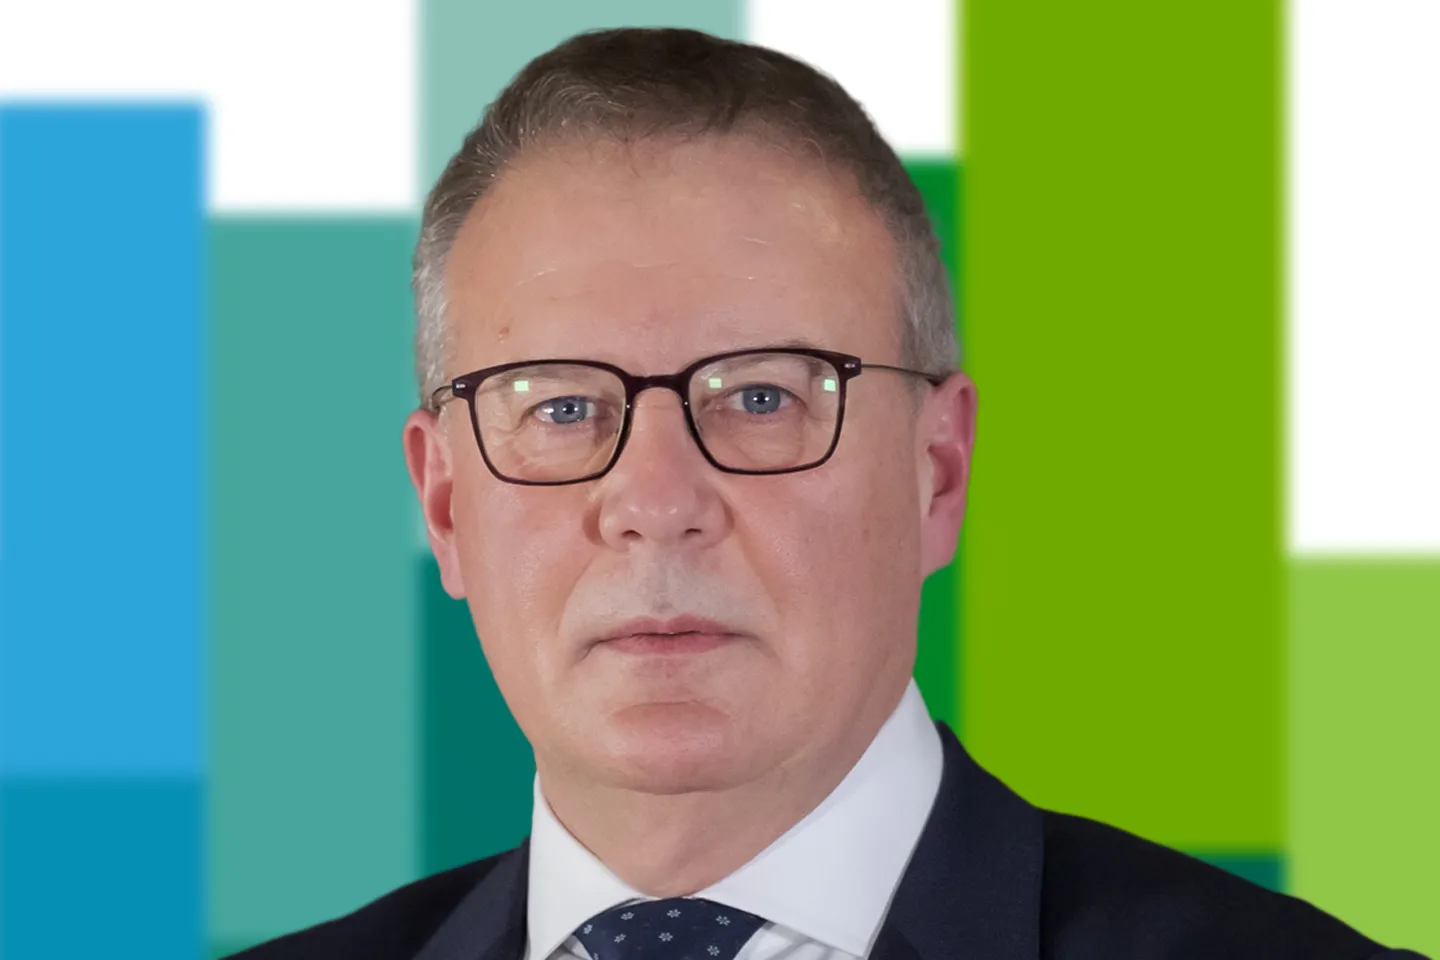 Fabrizio Testa - CEO of Borsa Italiana